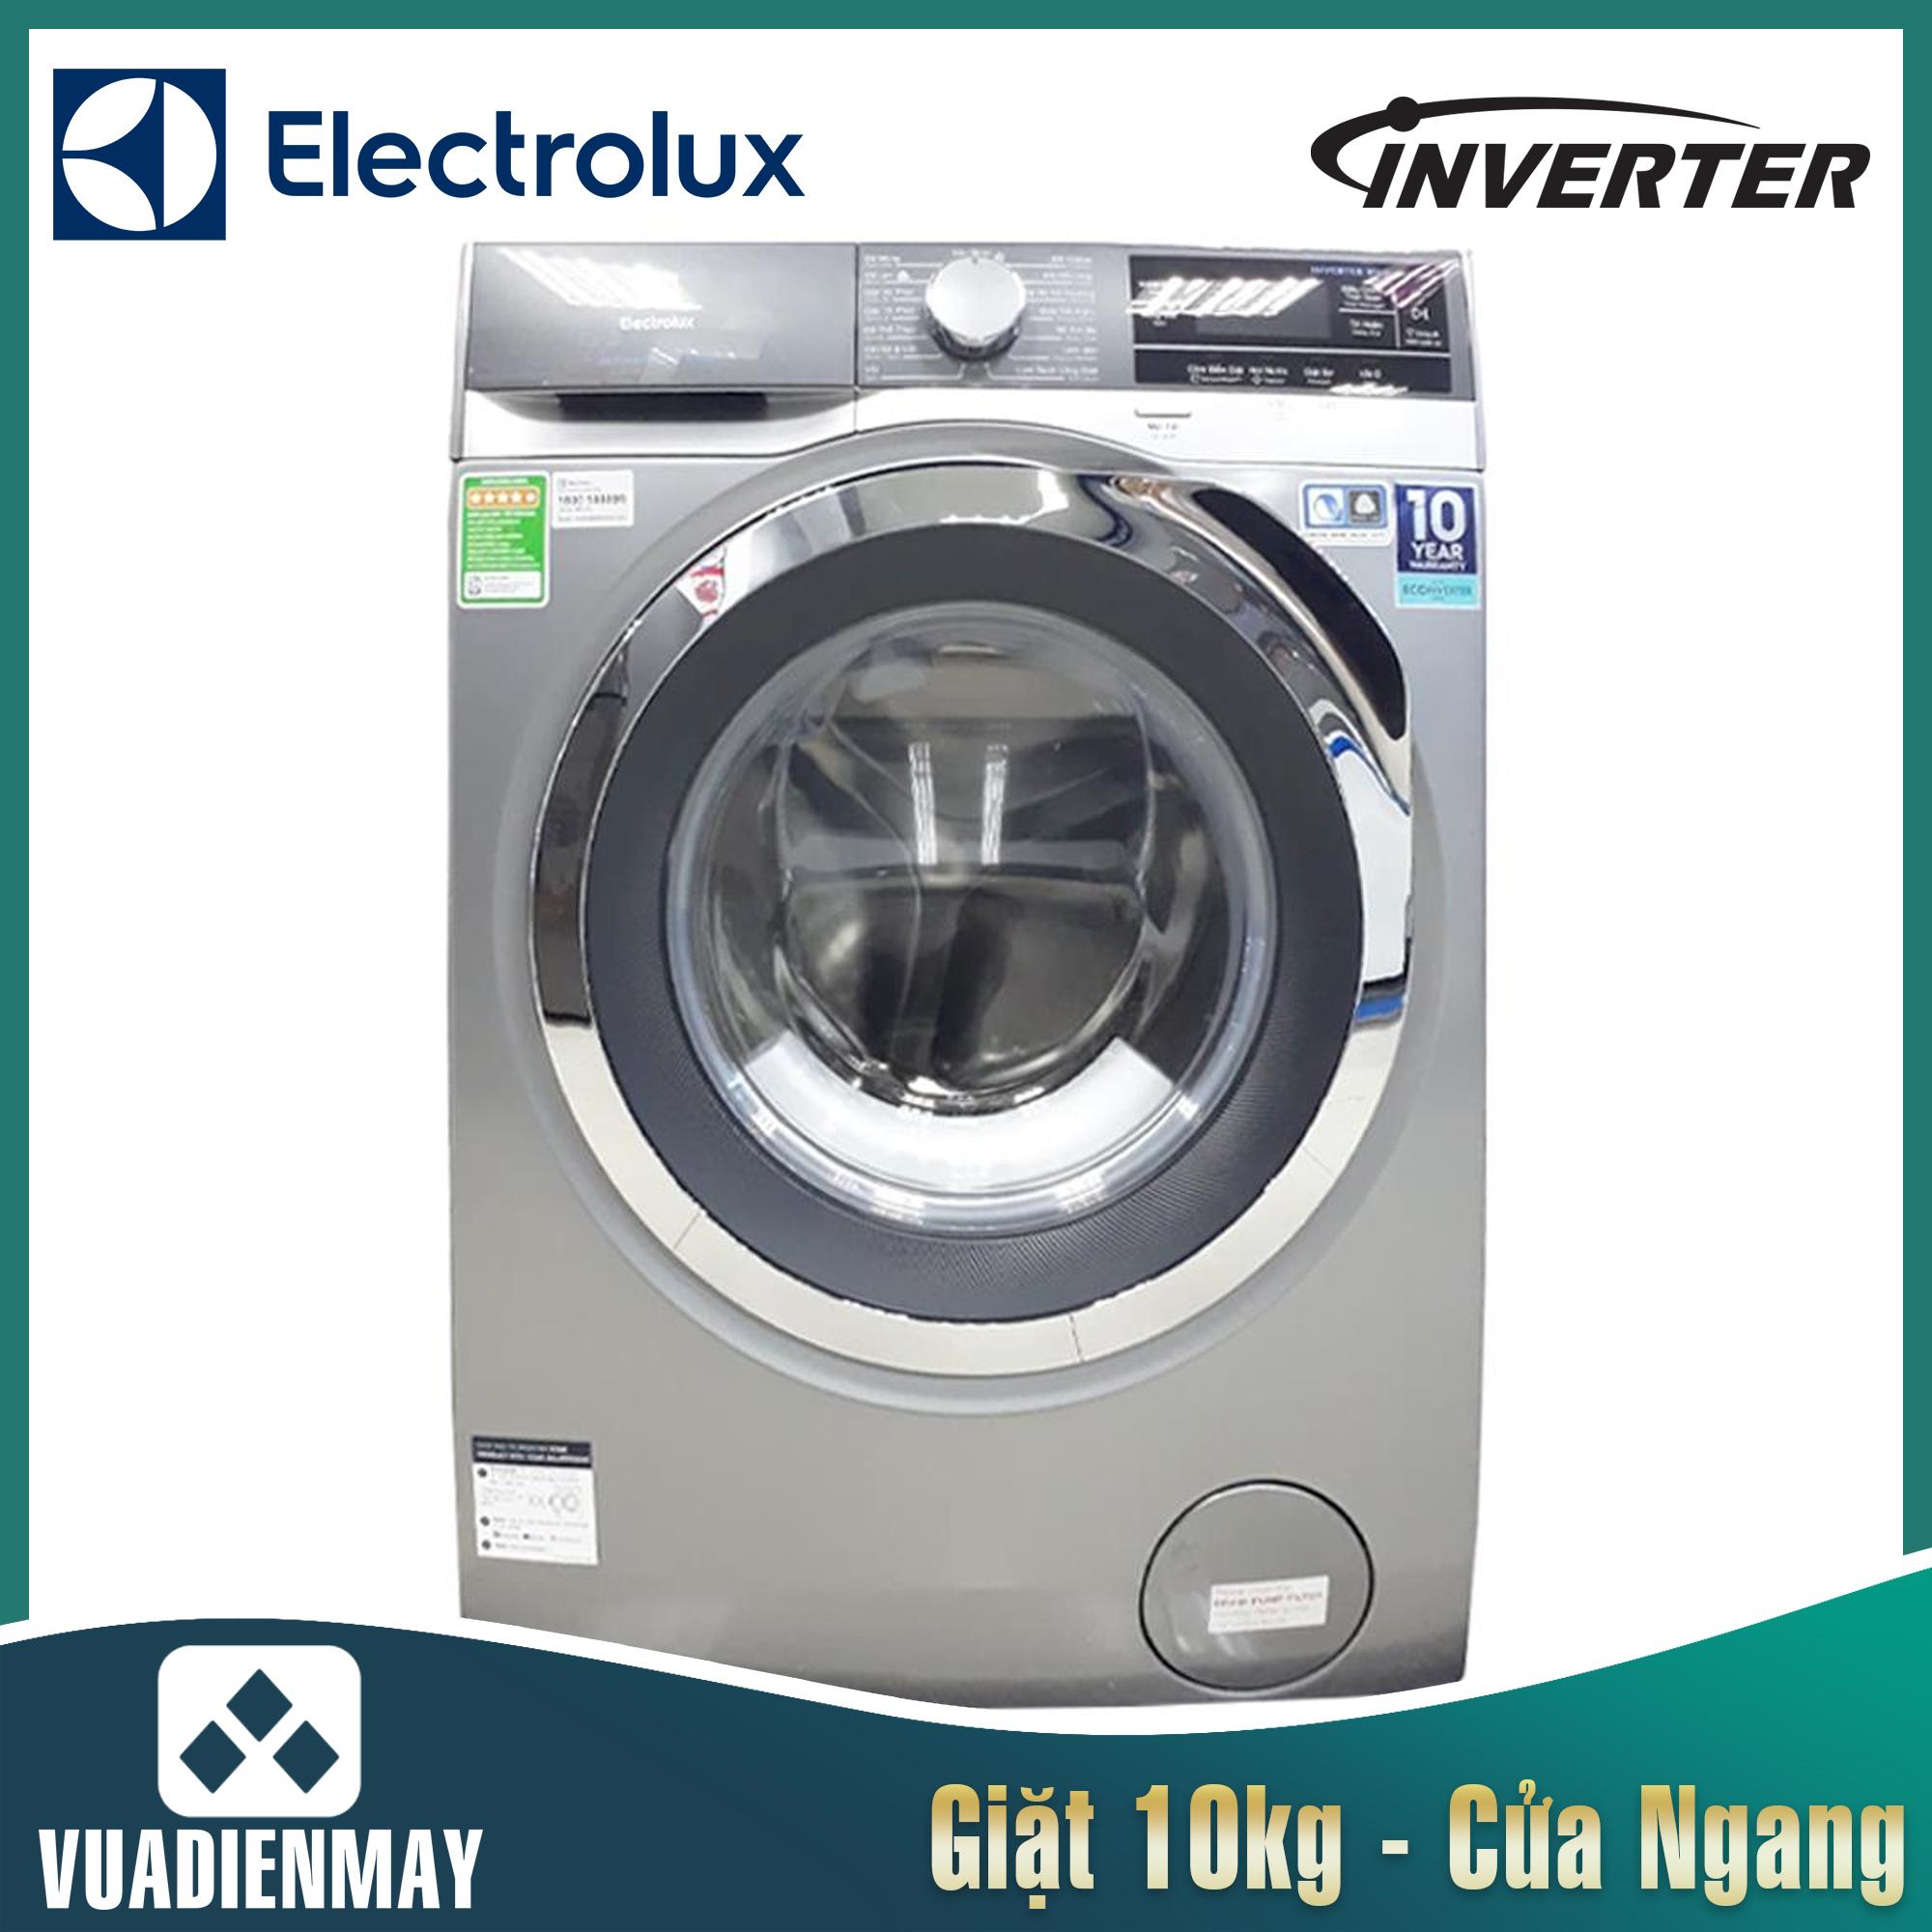 EWF1023BESA, Máy giặt Electrolux 10 kg lồng ngang